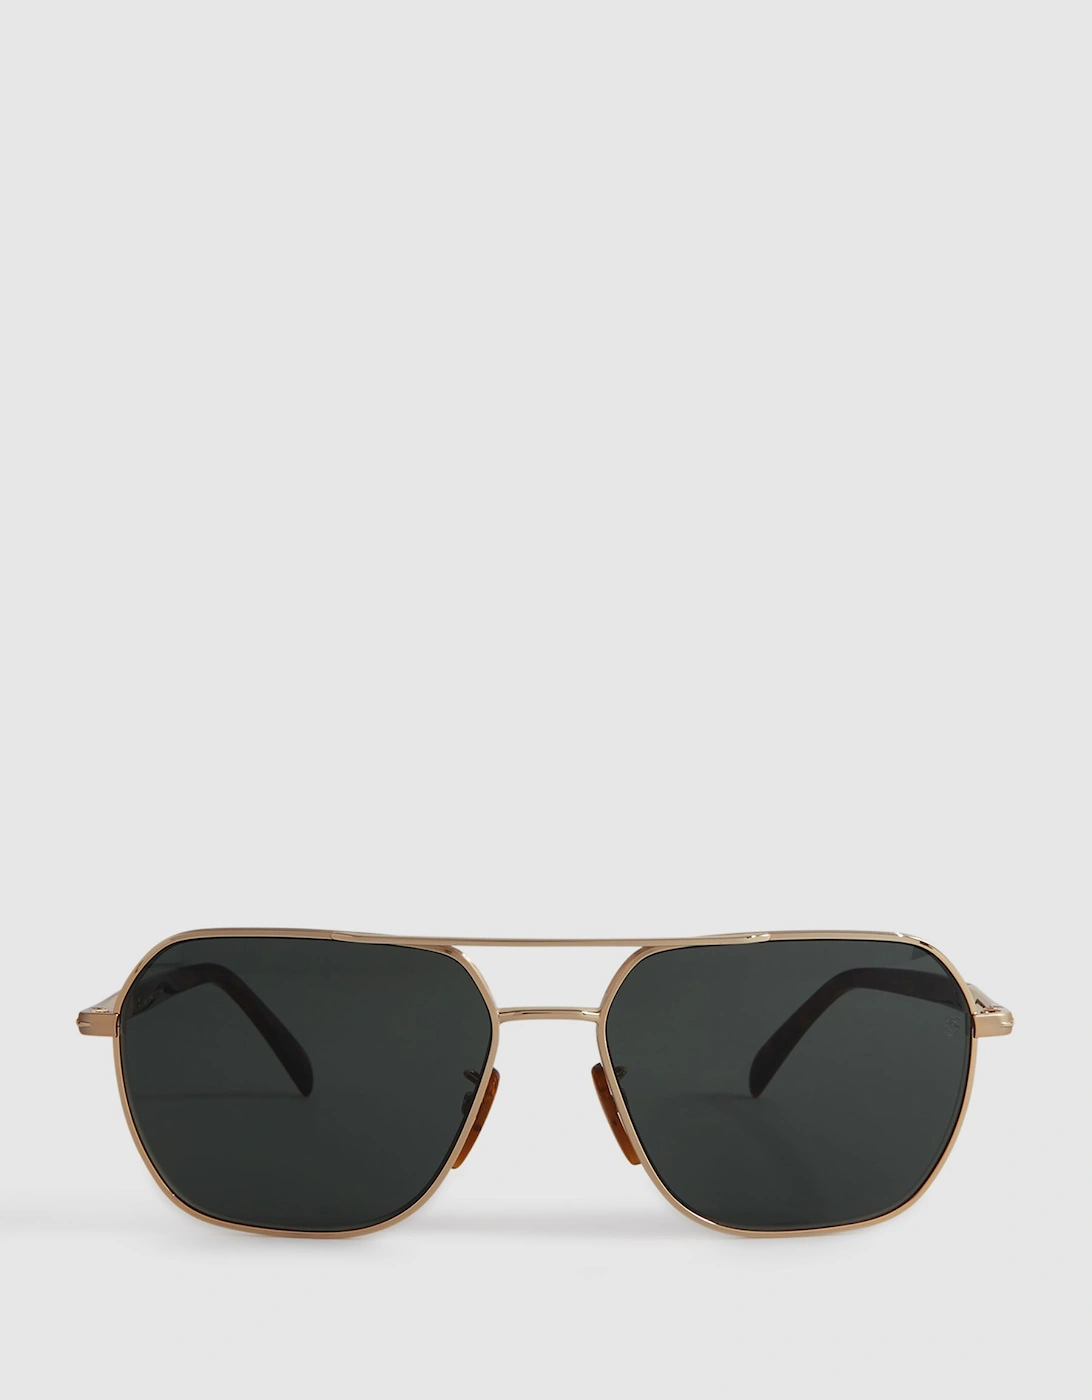 Eyewear by David Beckham Round Mottled Sunglasses, 2 of 1